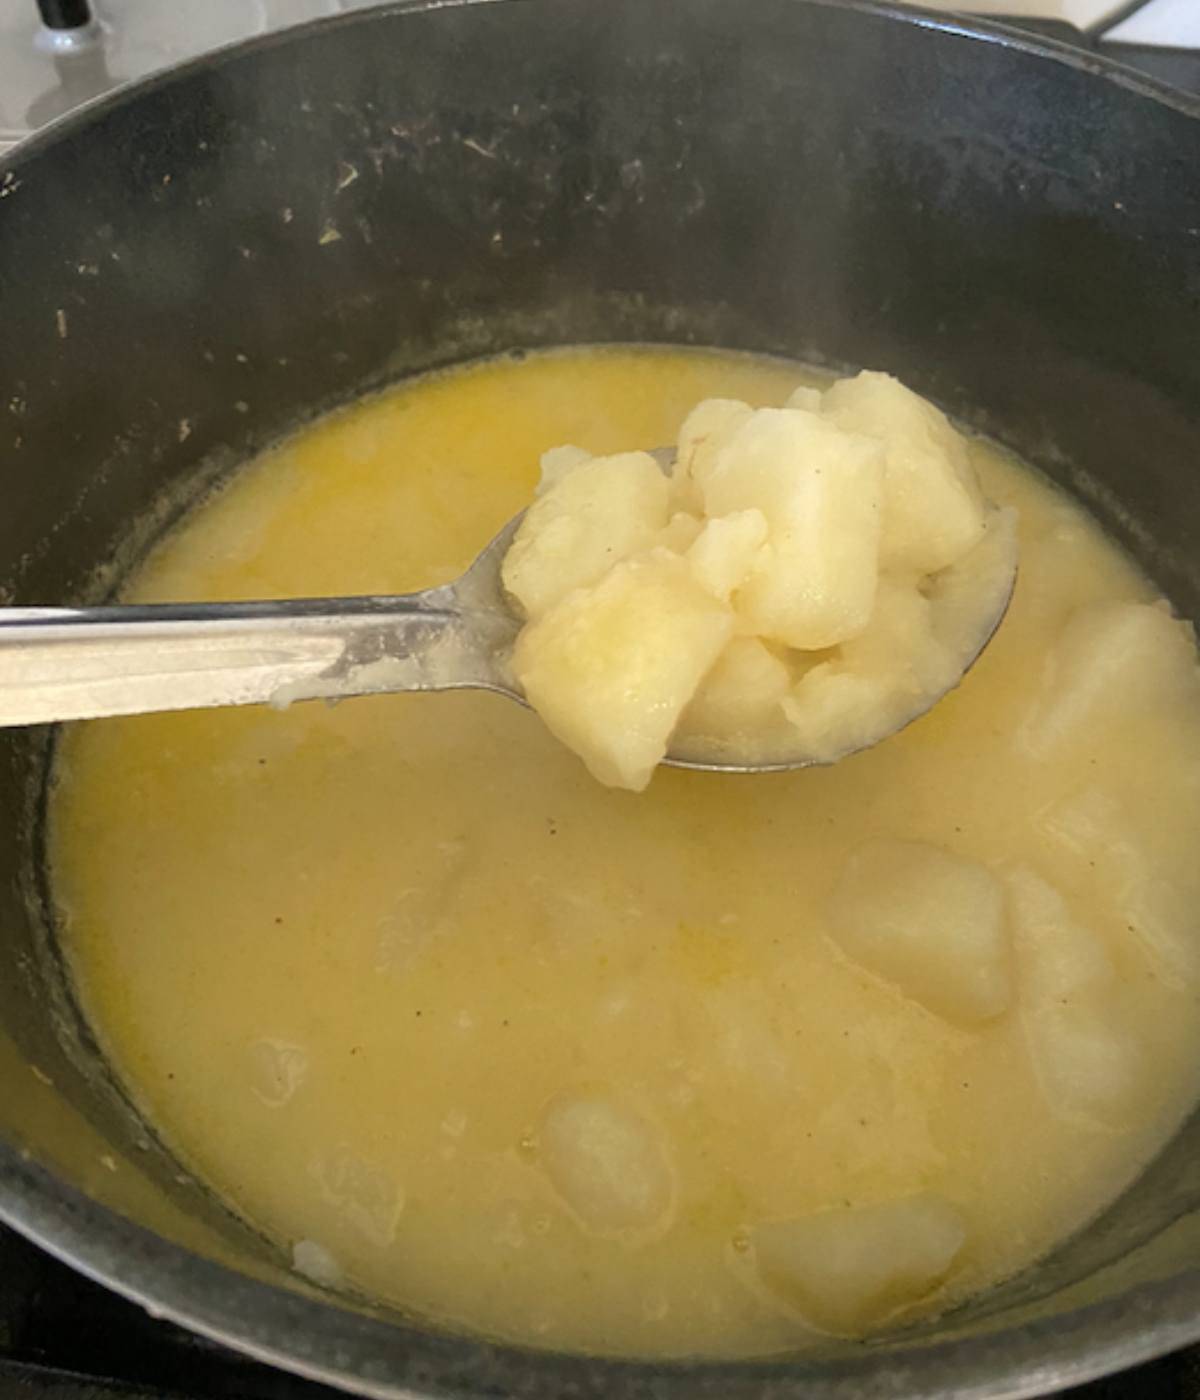 Spoon holding stewed potatoes.